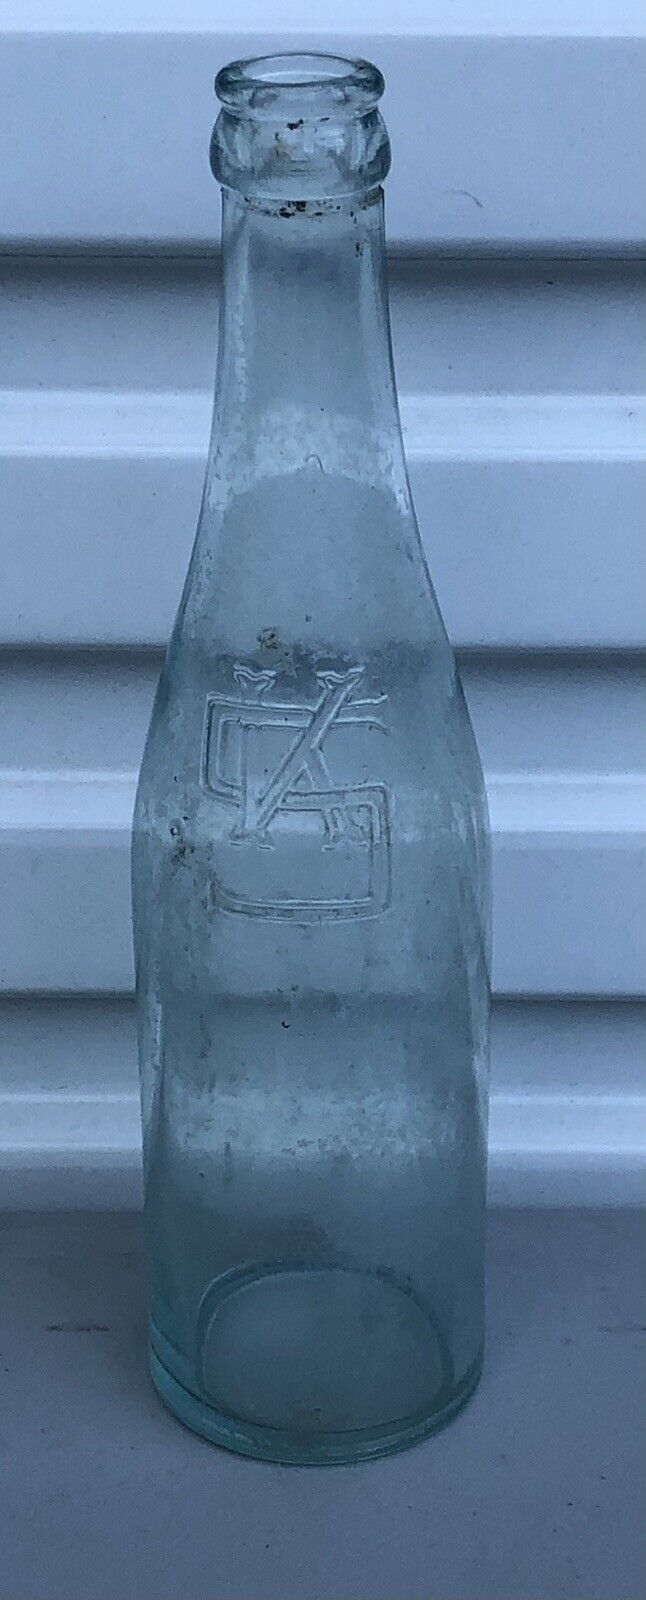 Vintage Kuebler Stang Embossed Logo KS Beer Bottle SANDUSKY OH Aqua Glass